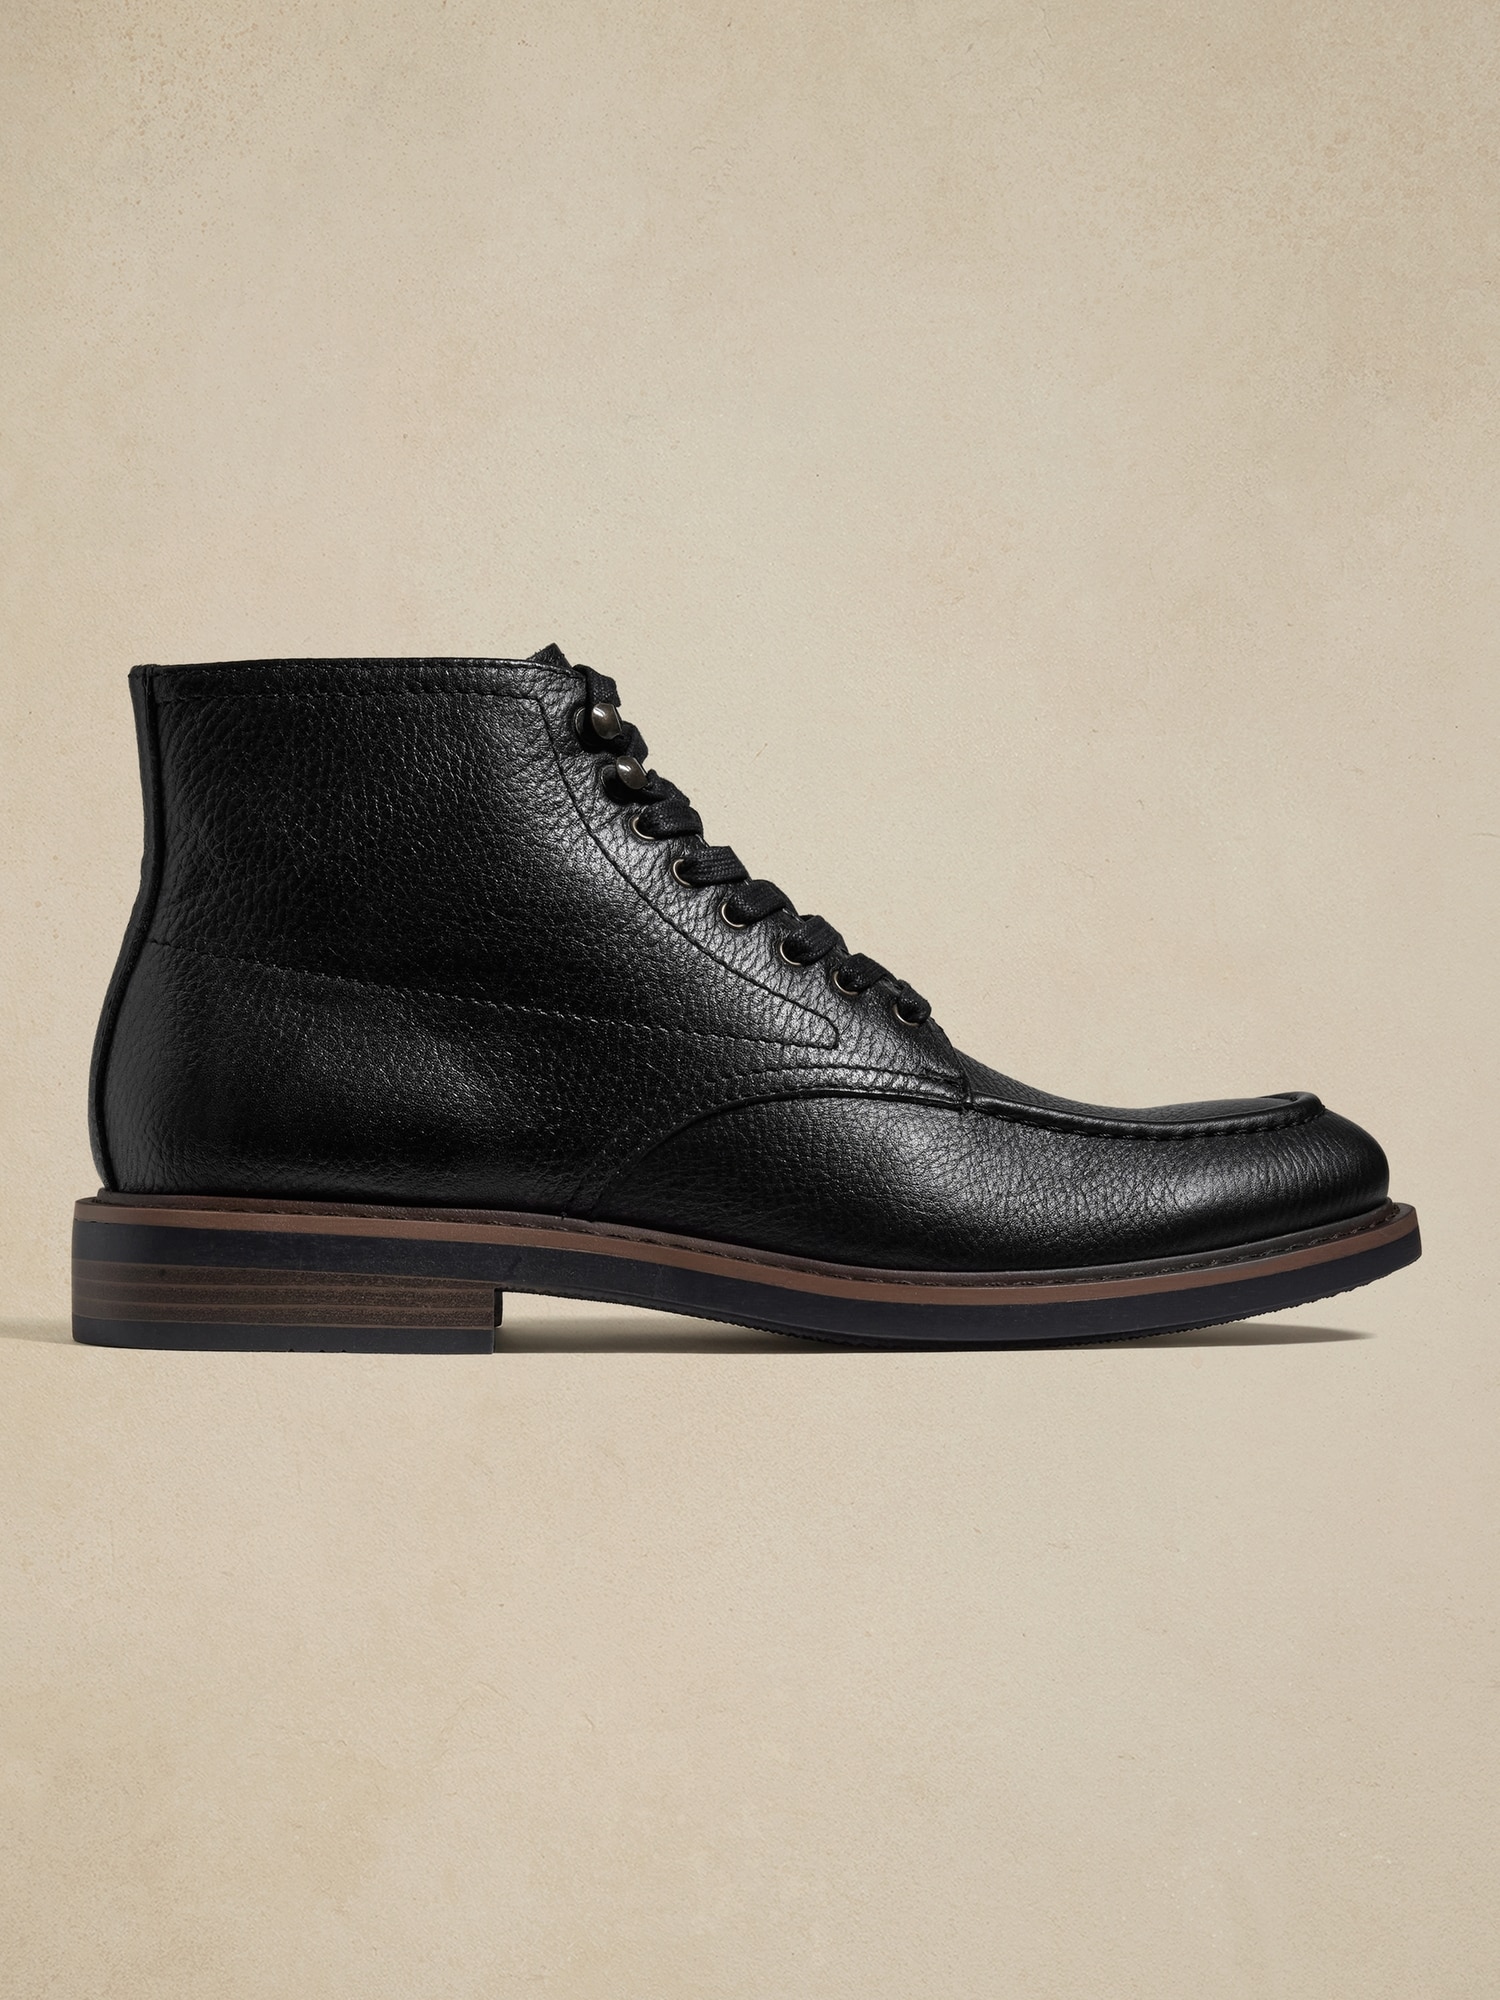 Mock-Toe Leather Boot